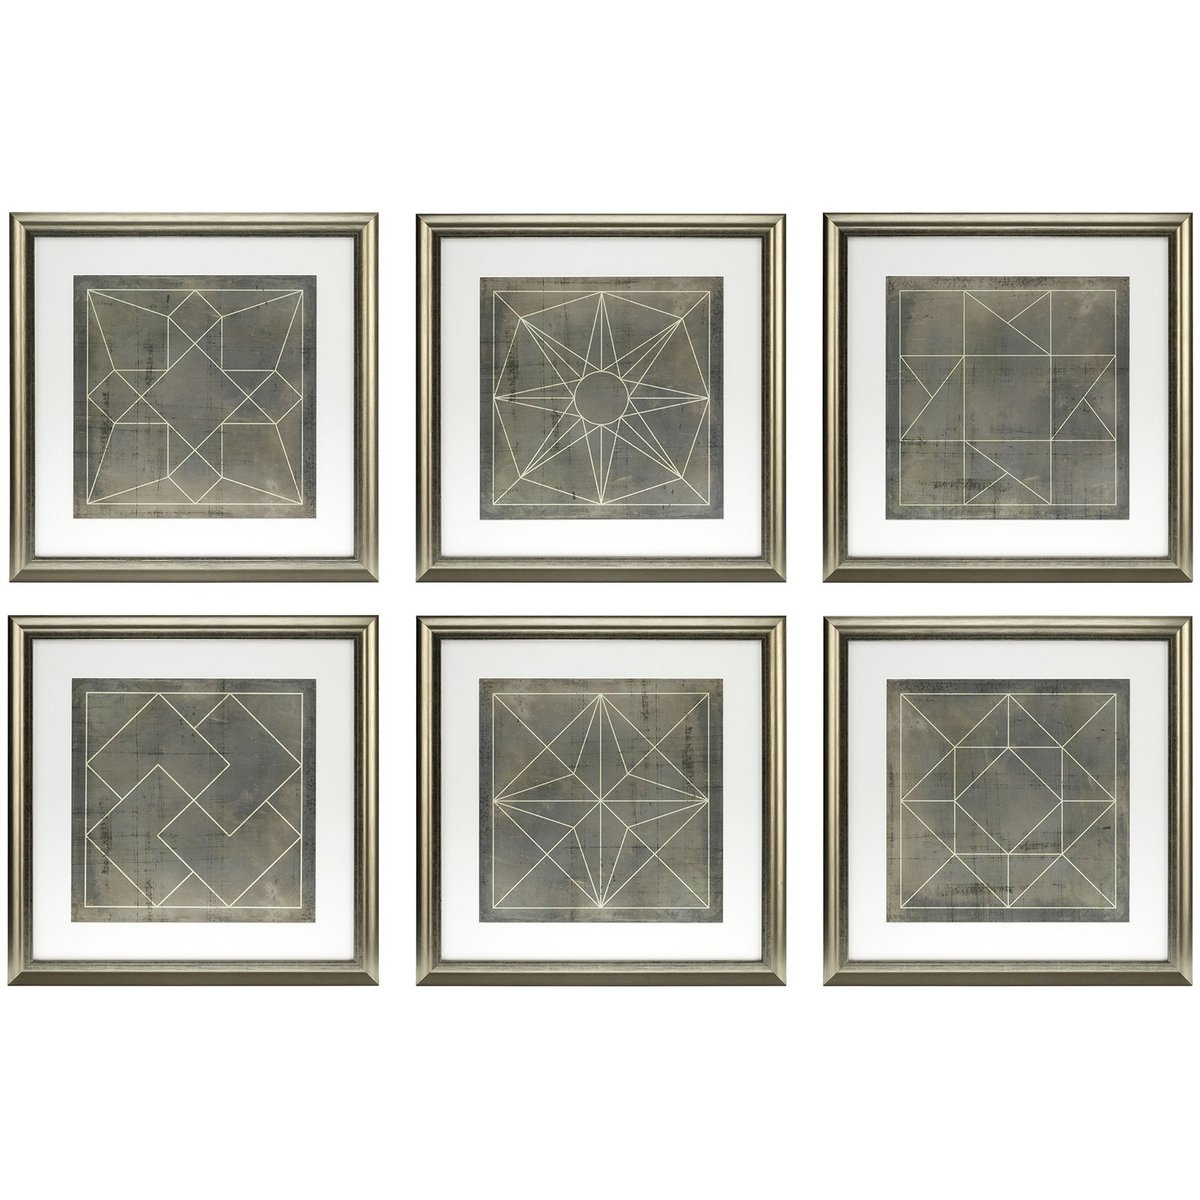 Set of 6 Geometric Blueprints Prints